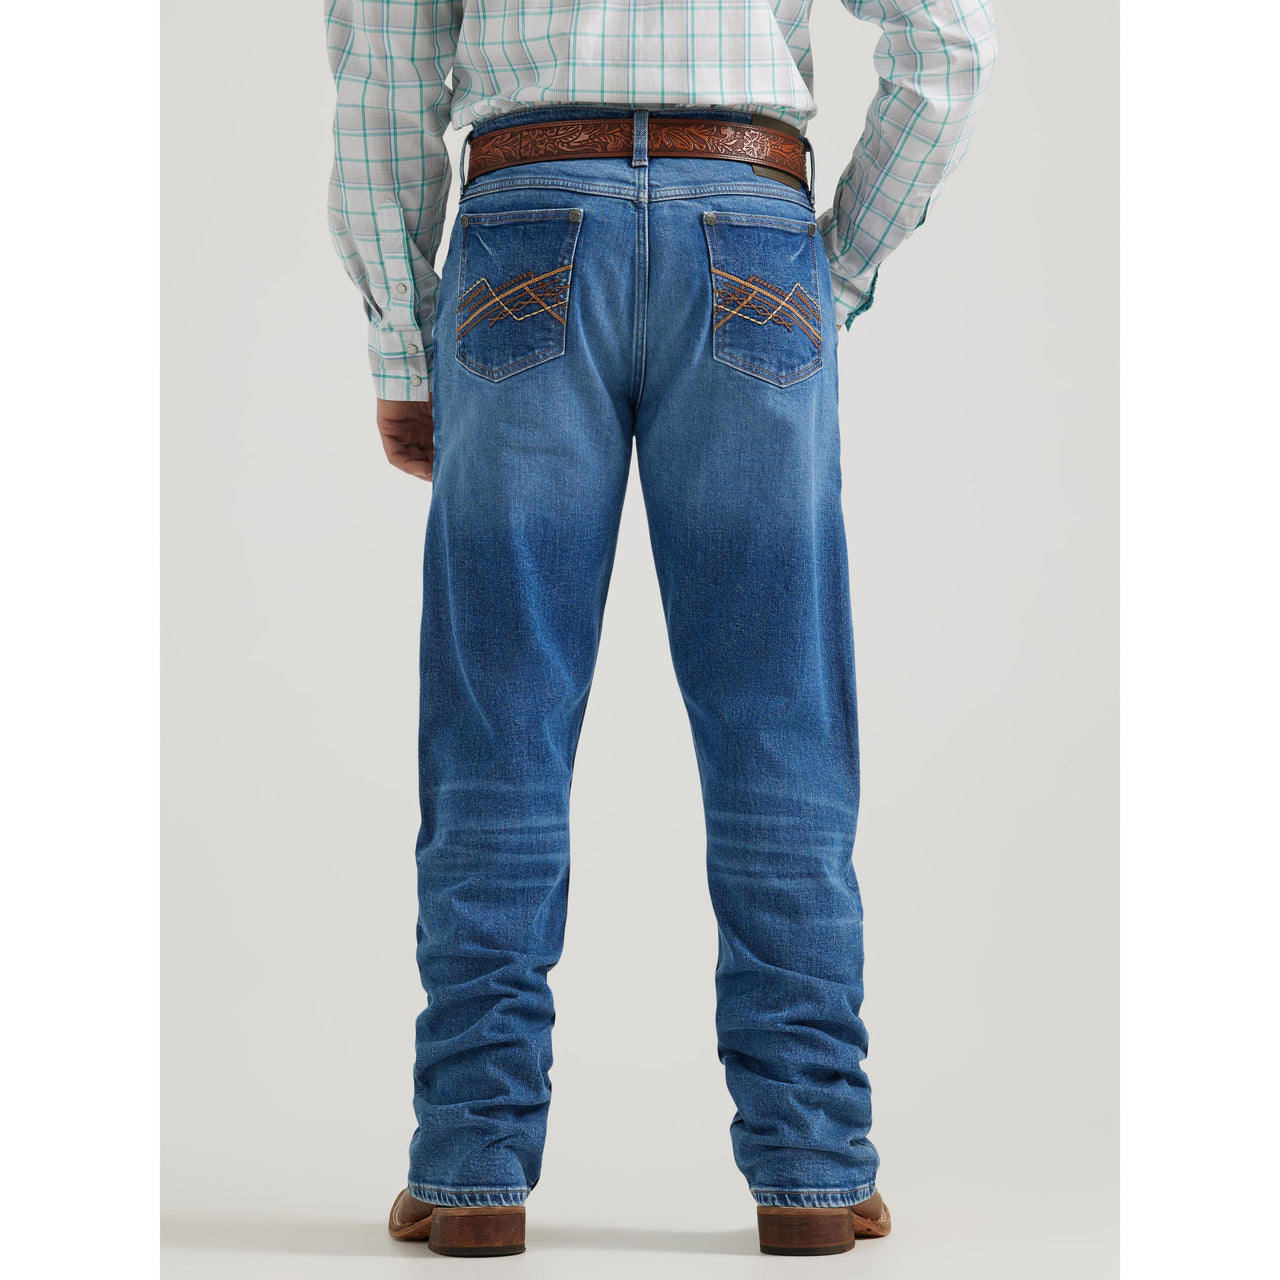 Wrangler Men's 20X Vintage Bootcut Jeans - Backwater